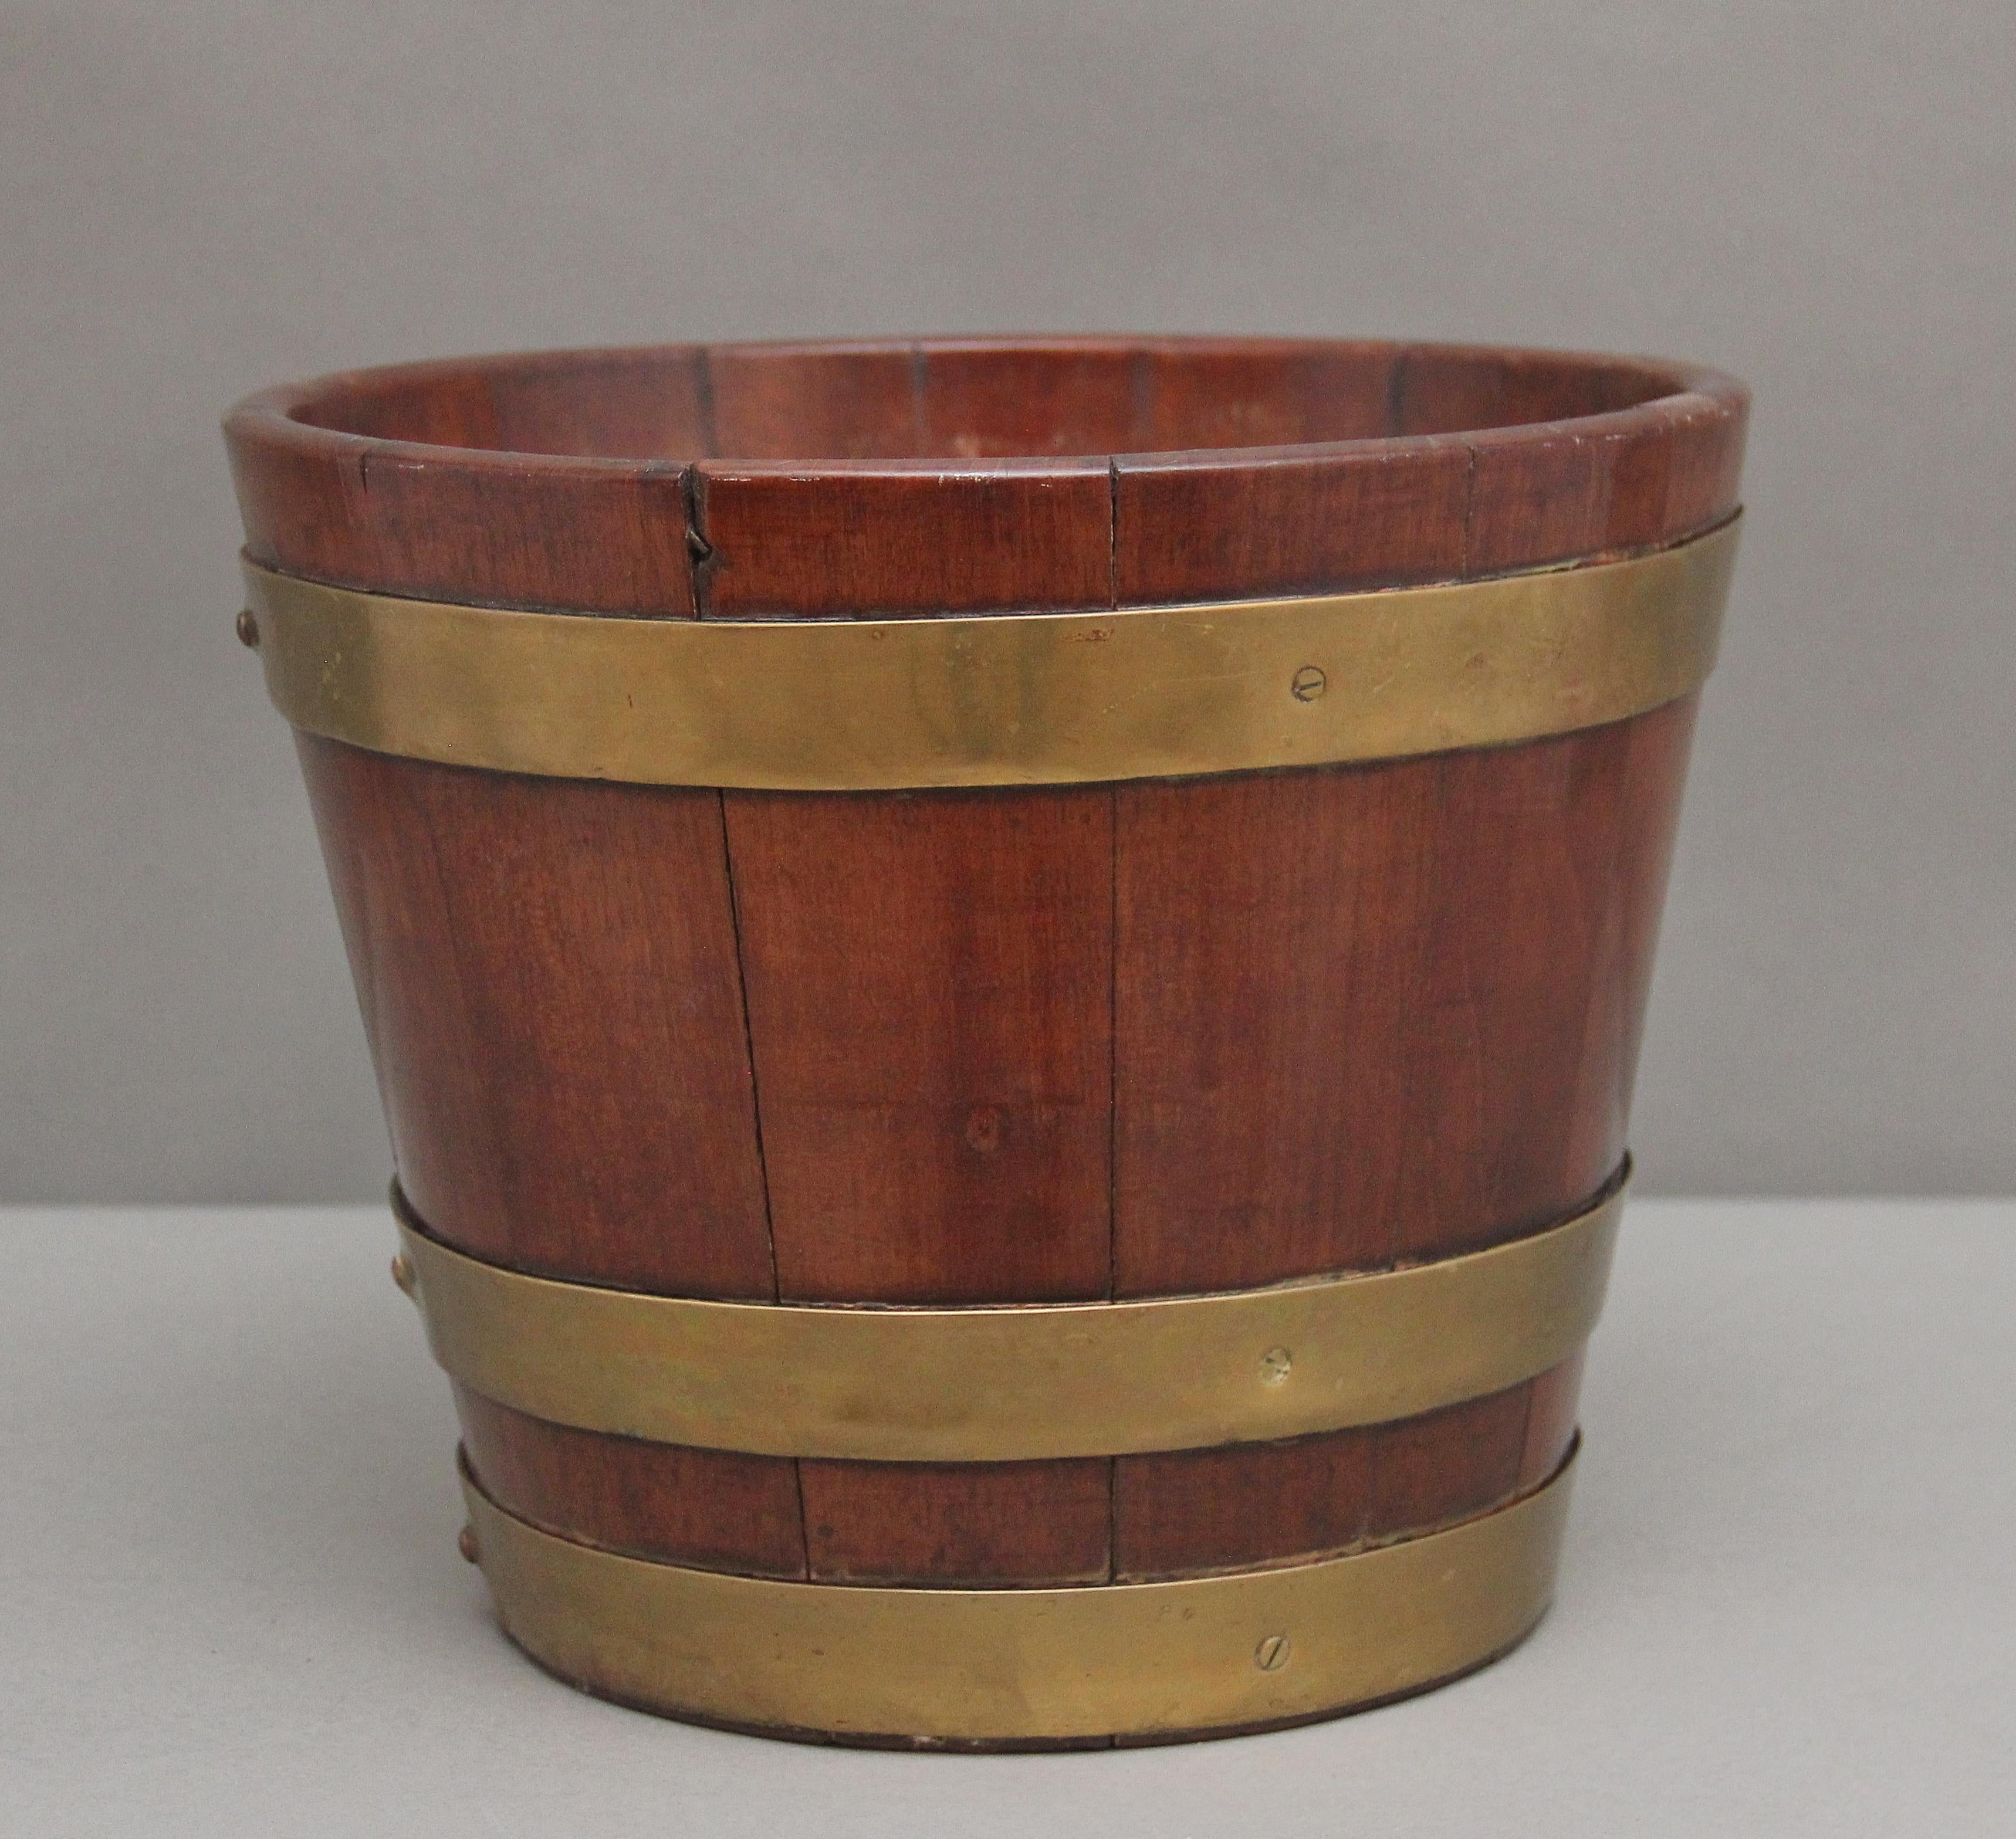 Early 19th Century mahogany brass bound backet of circular form tapering down towards the bottom, good quality bucket and having a nice warm mahogany colour.  Circa 1830.